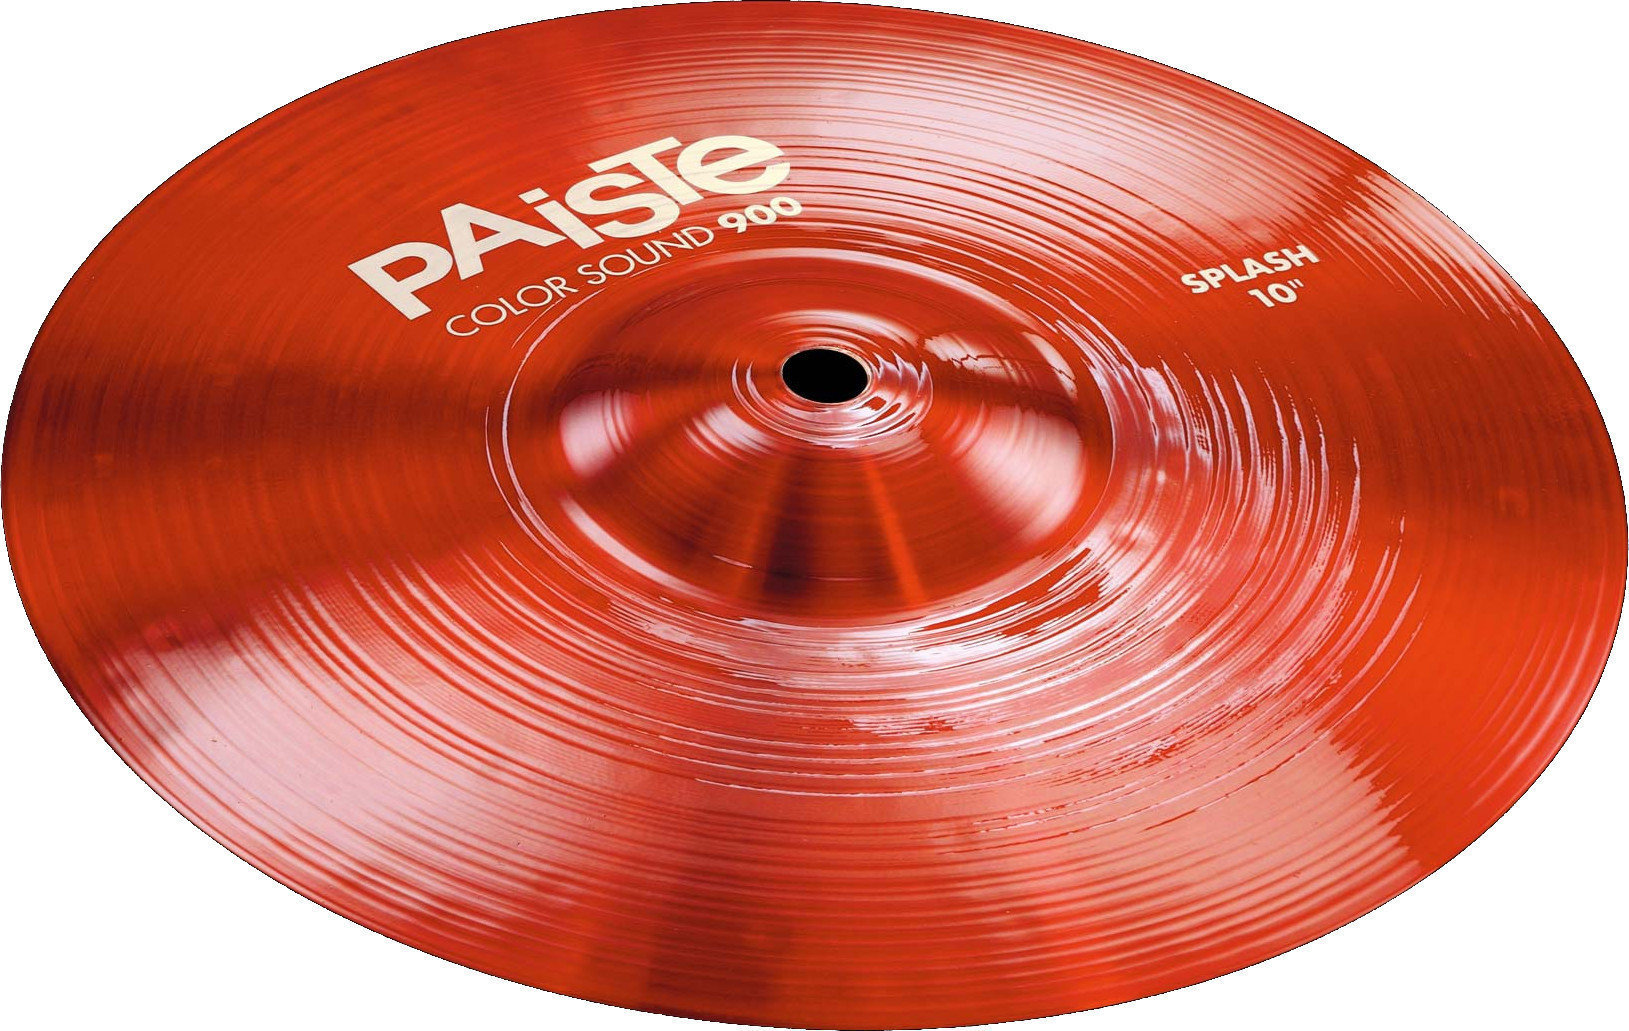 Splash Cymbal Paiste Color Sound 900 Splash Cymbal 10" Red